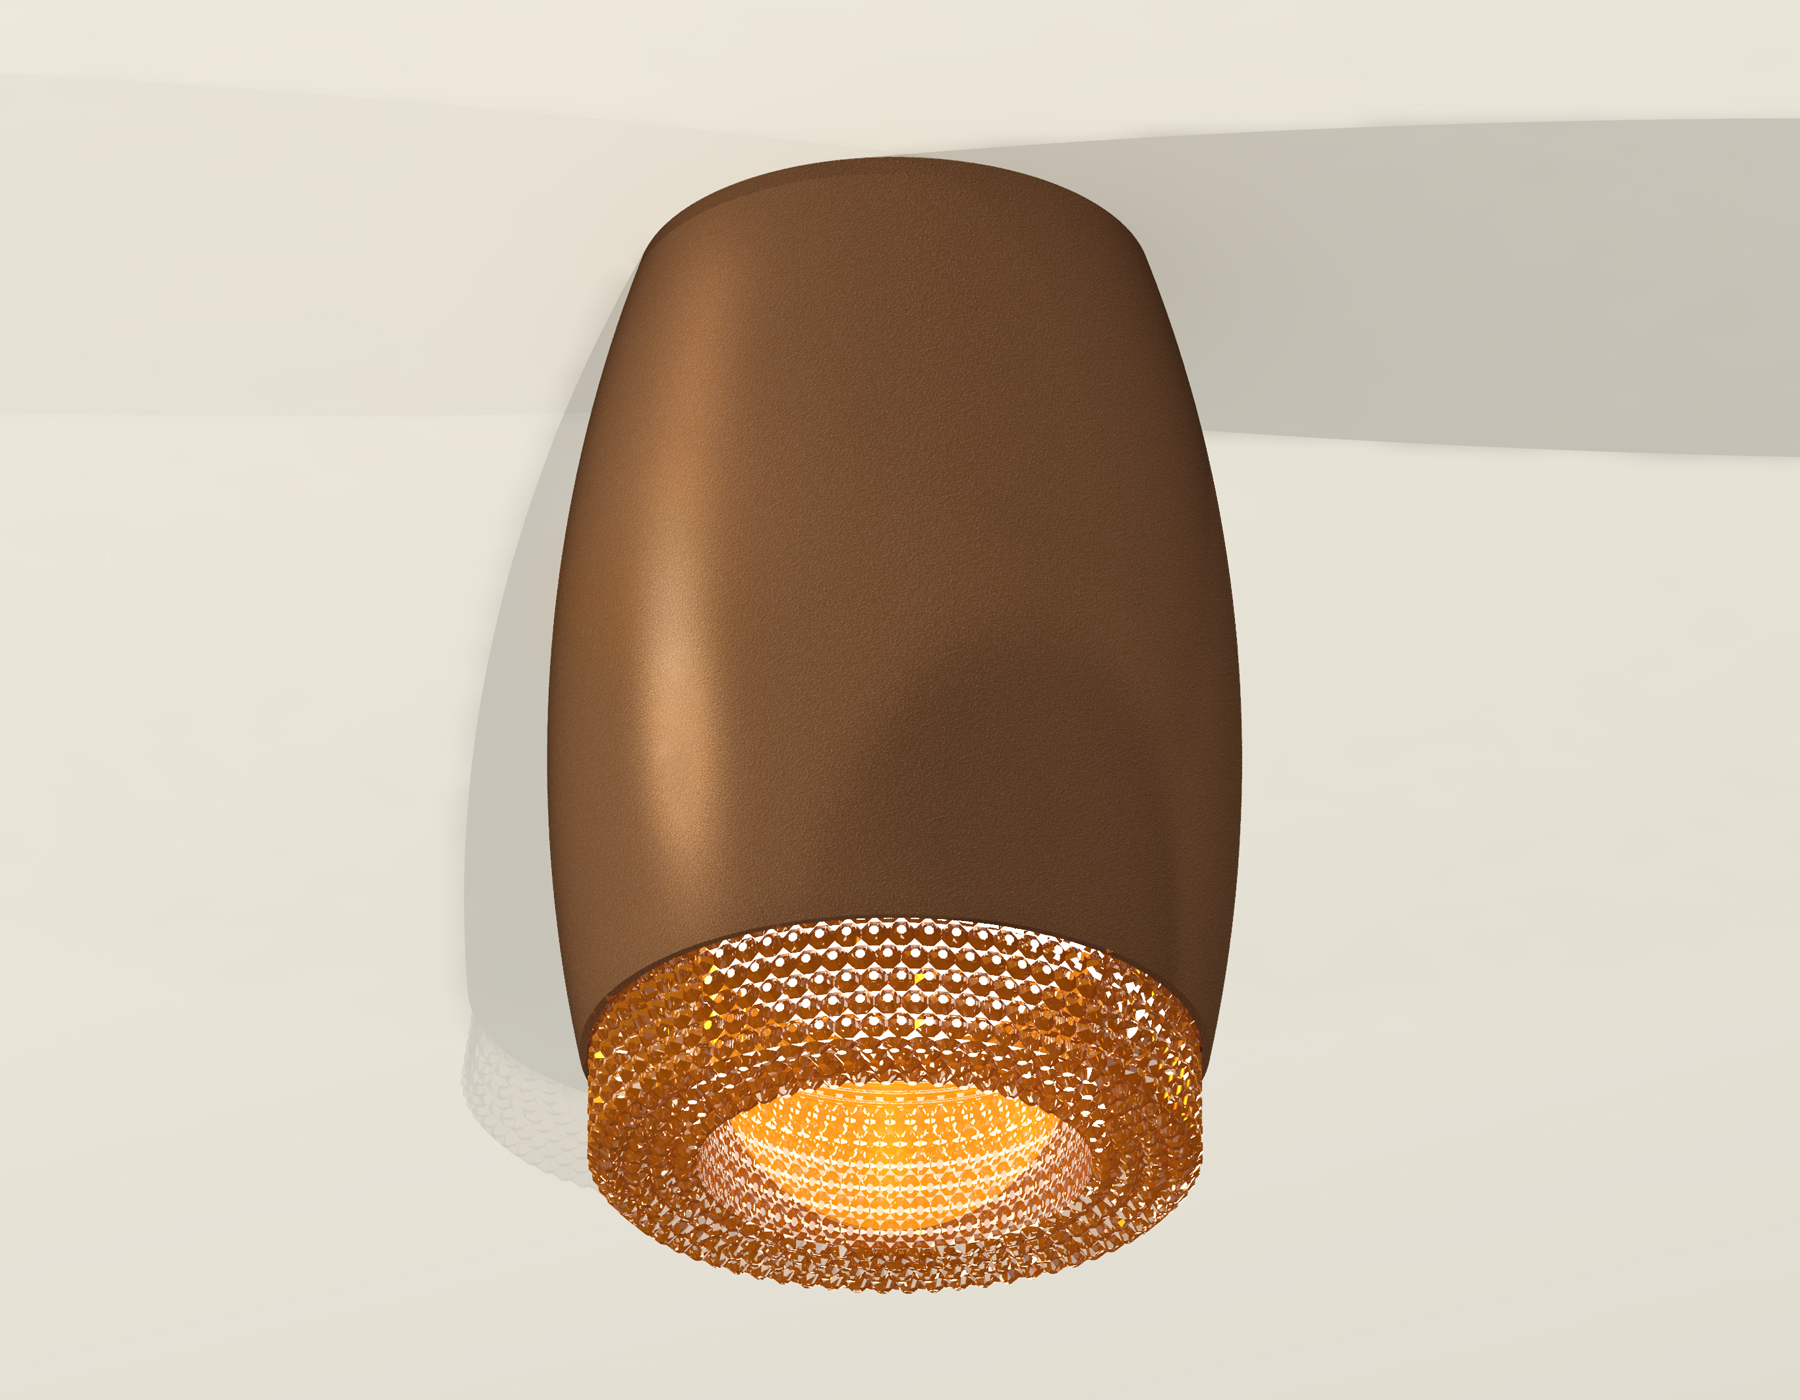 Накладной светильник Ambrella Light Techno XS1124011 (C1124, N7195) в #REGION_NAME_DECLINE_PP#